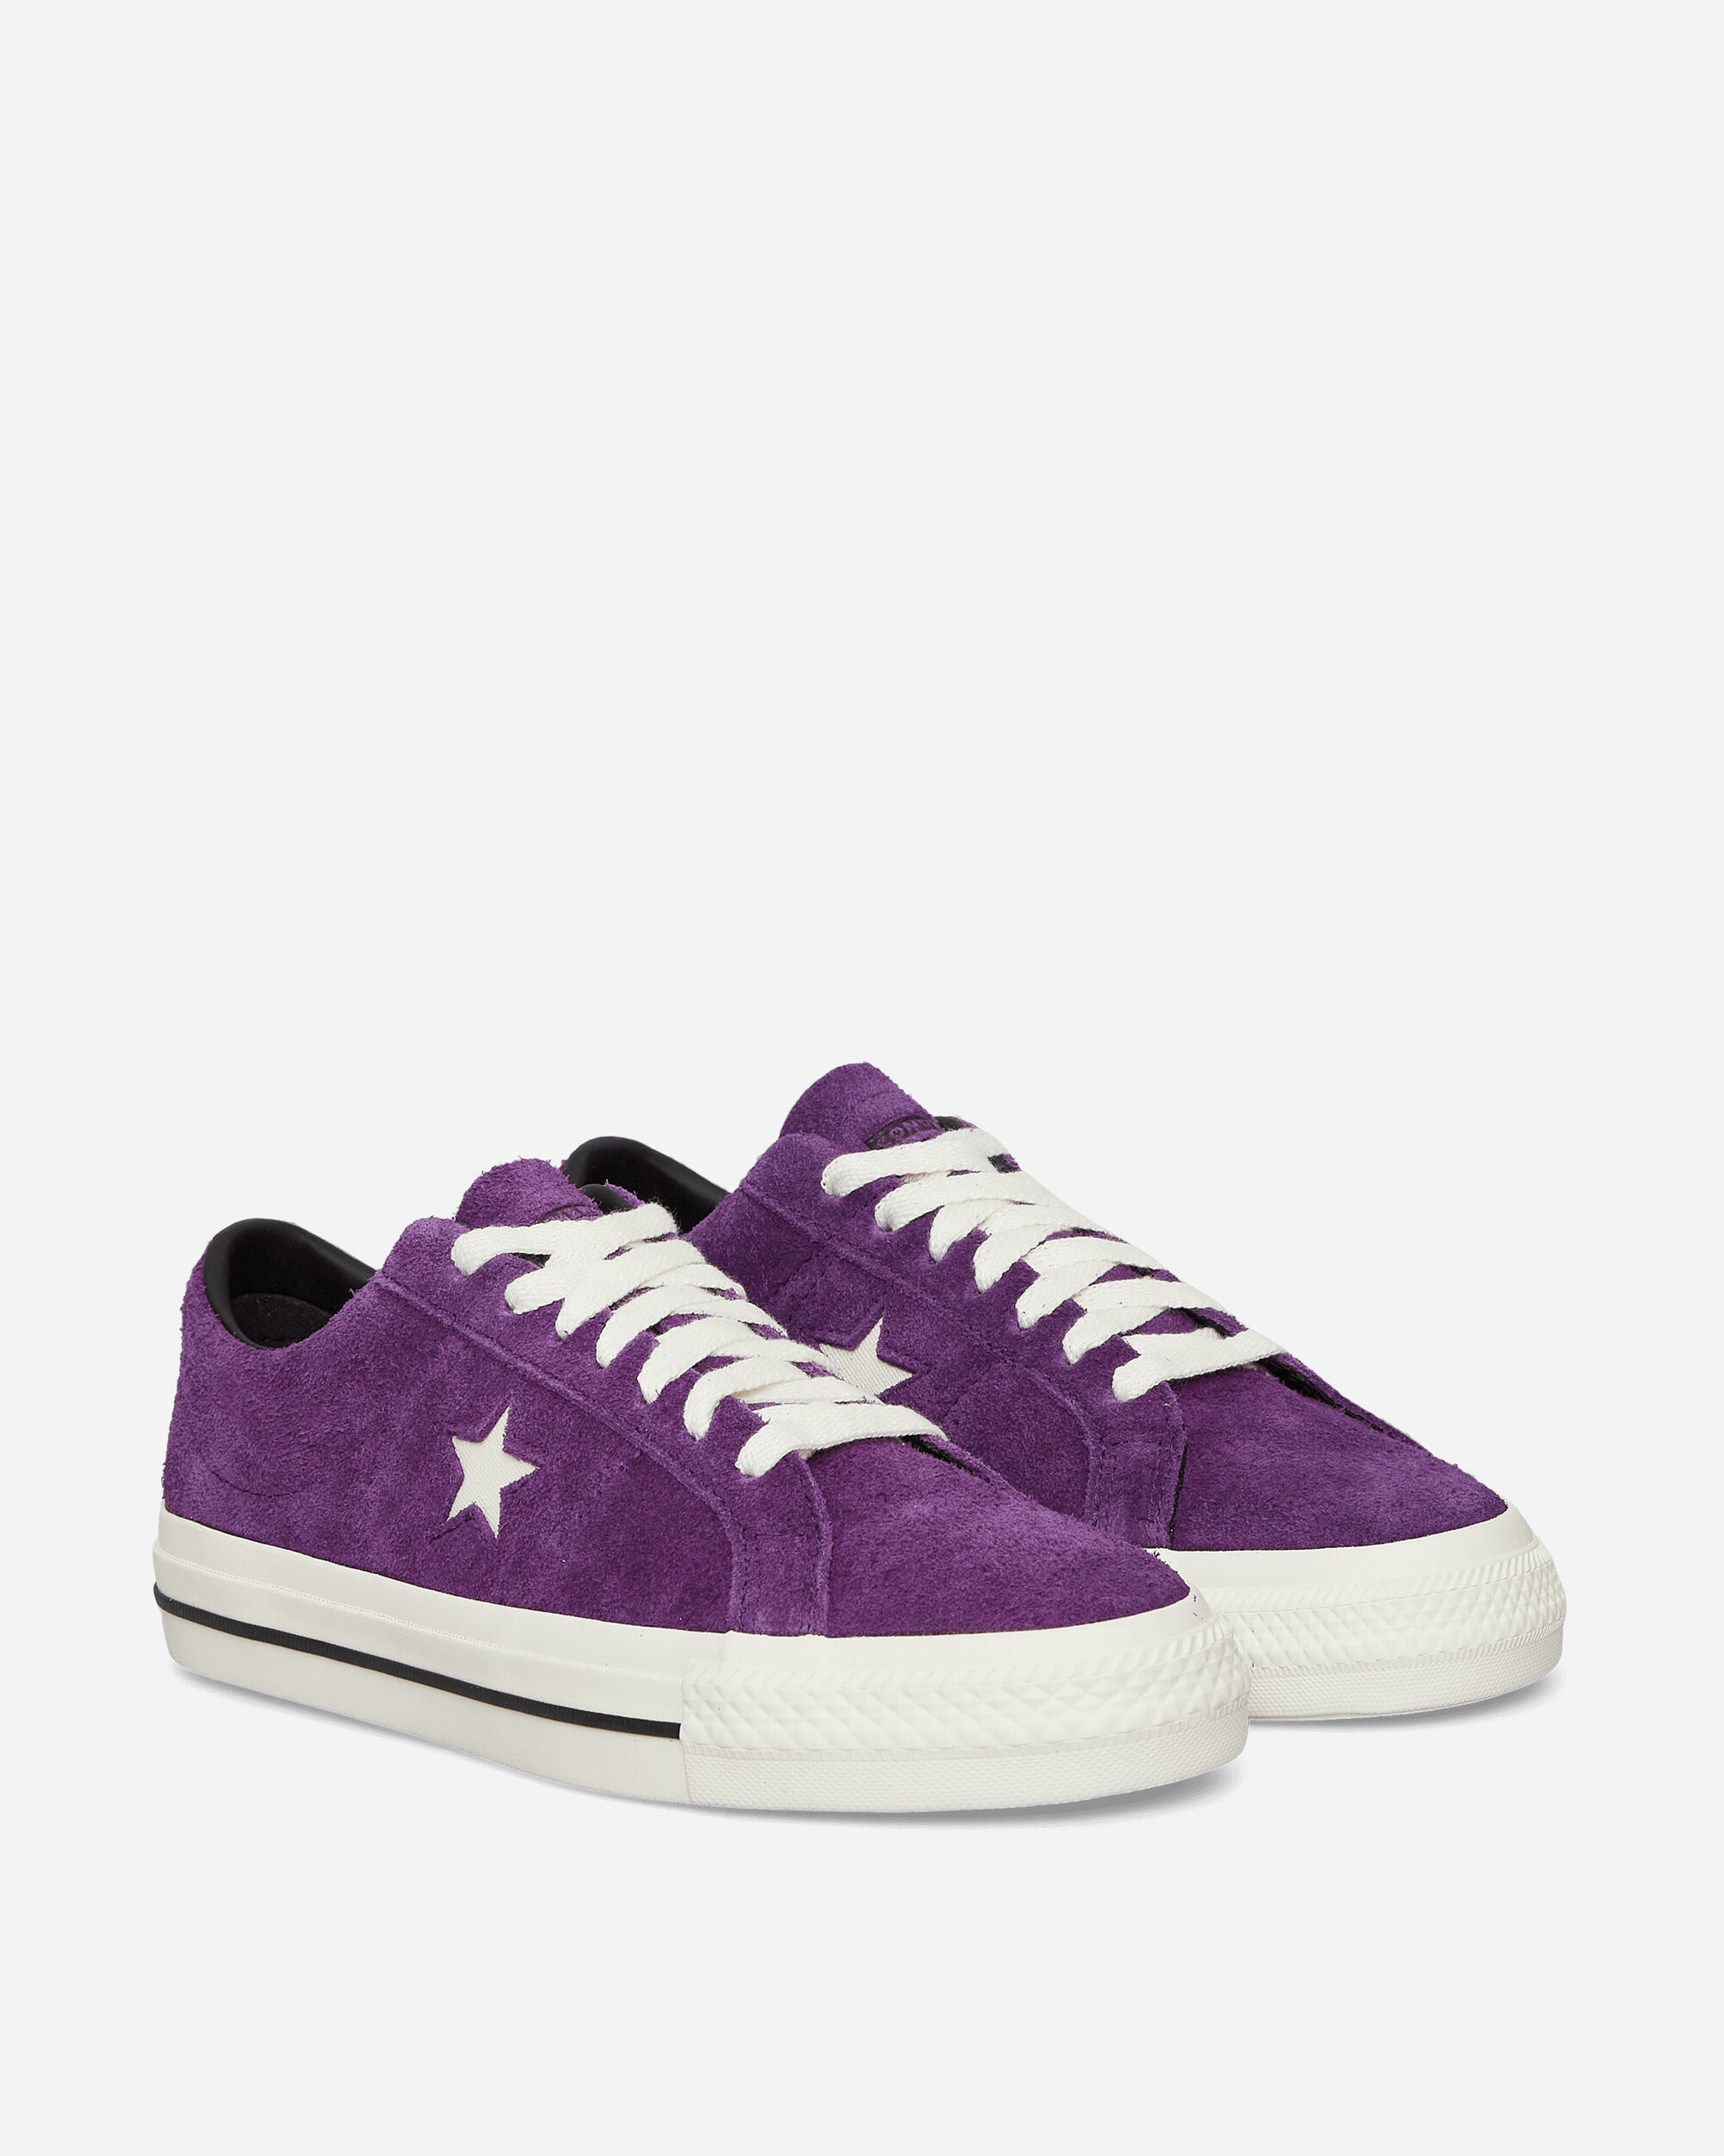 Converse One Star Pro Night Purple/Egret/Black Sneakers Low A08141C